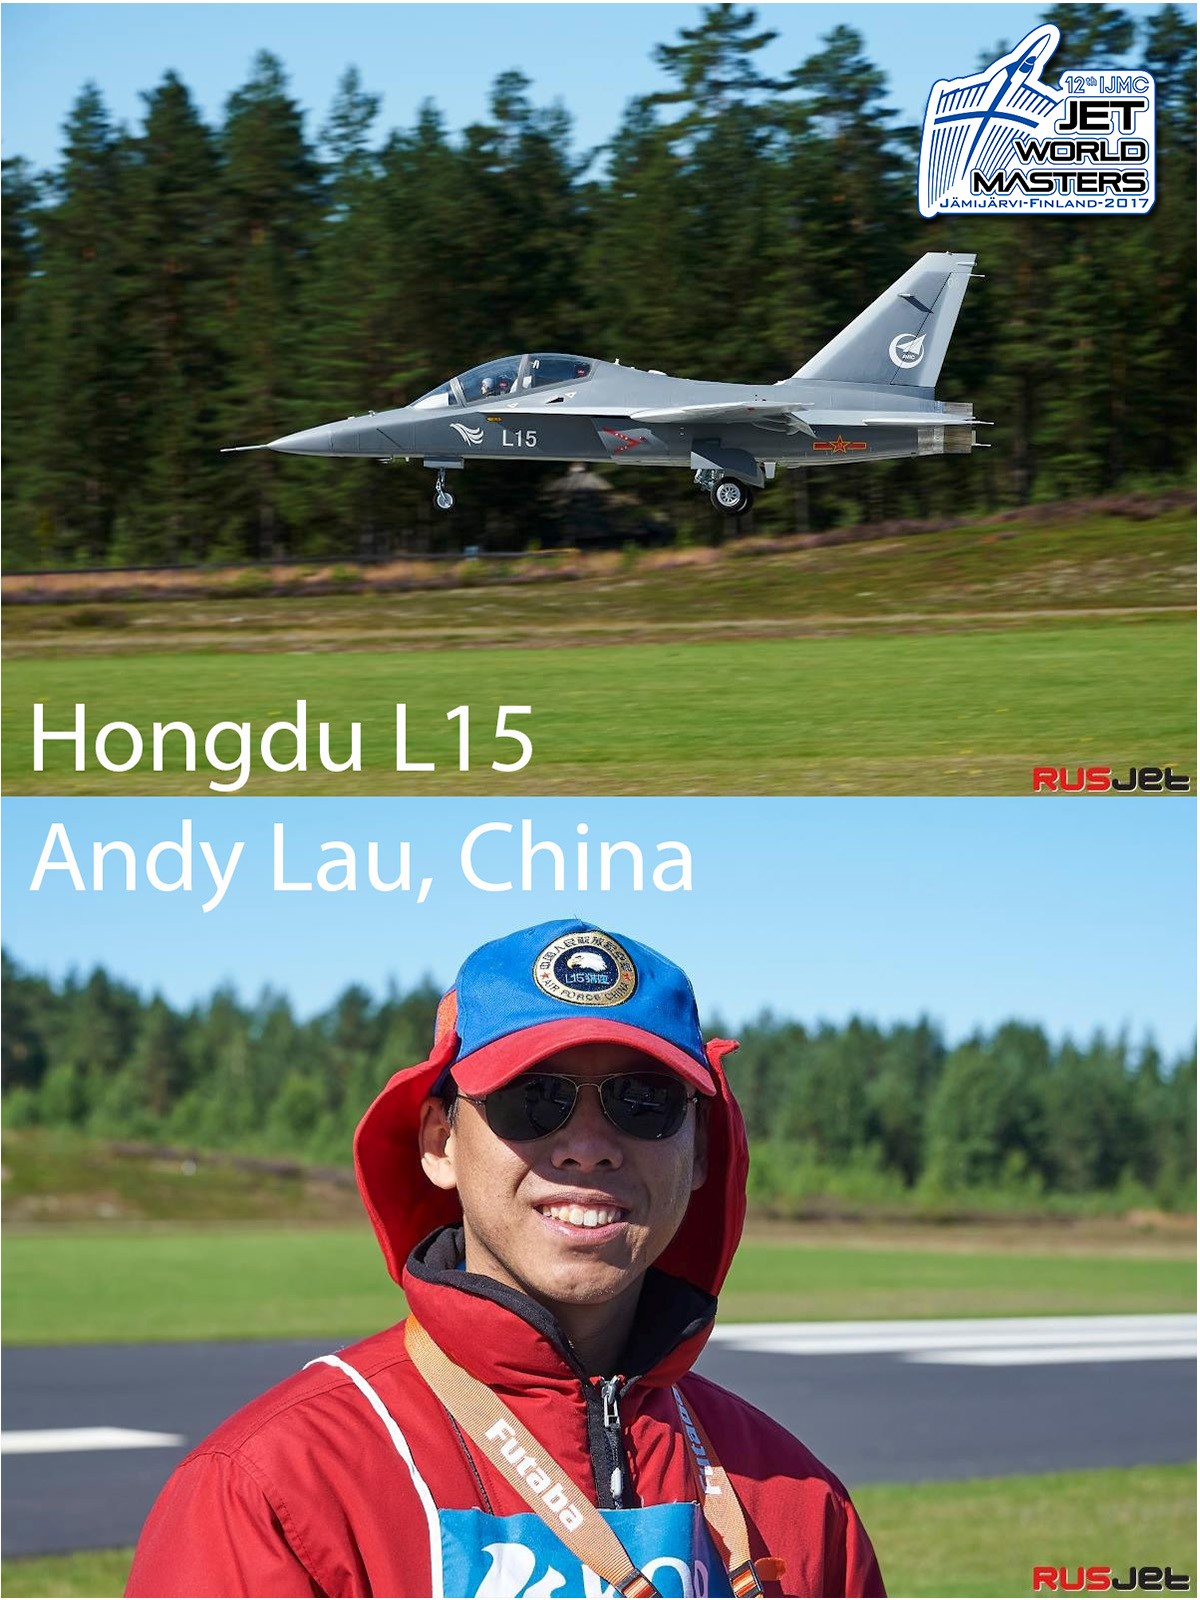 China Andy Lau.jpg(325 KB)